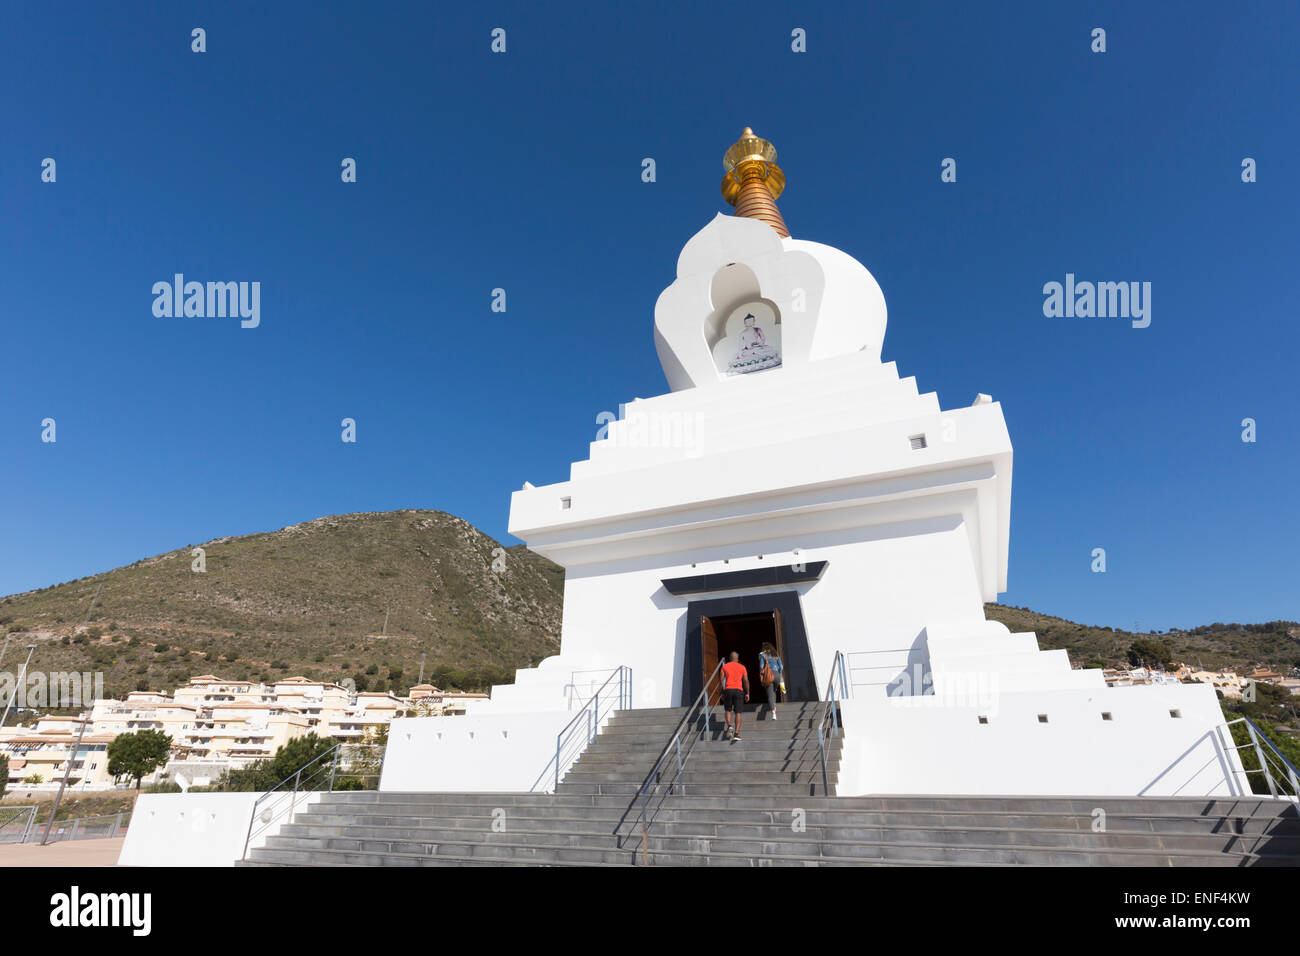 Benalmadena Pueblo, Costa del Sol, Malaga Province, Andalusia, southern Spain.  The Buddhist Enlightenment Stupa. Stock Photo